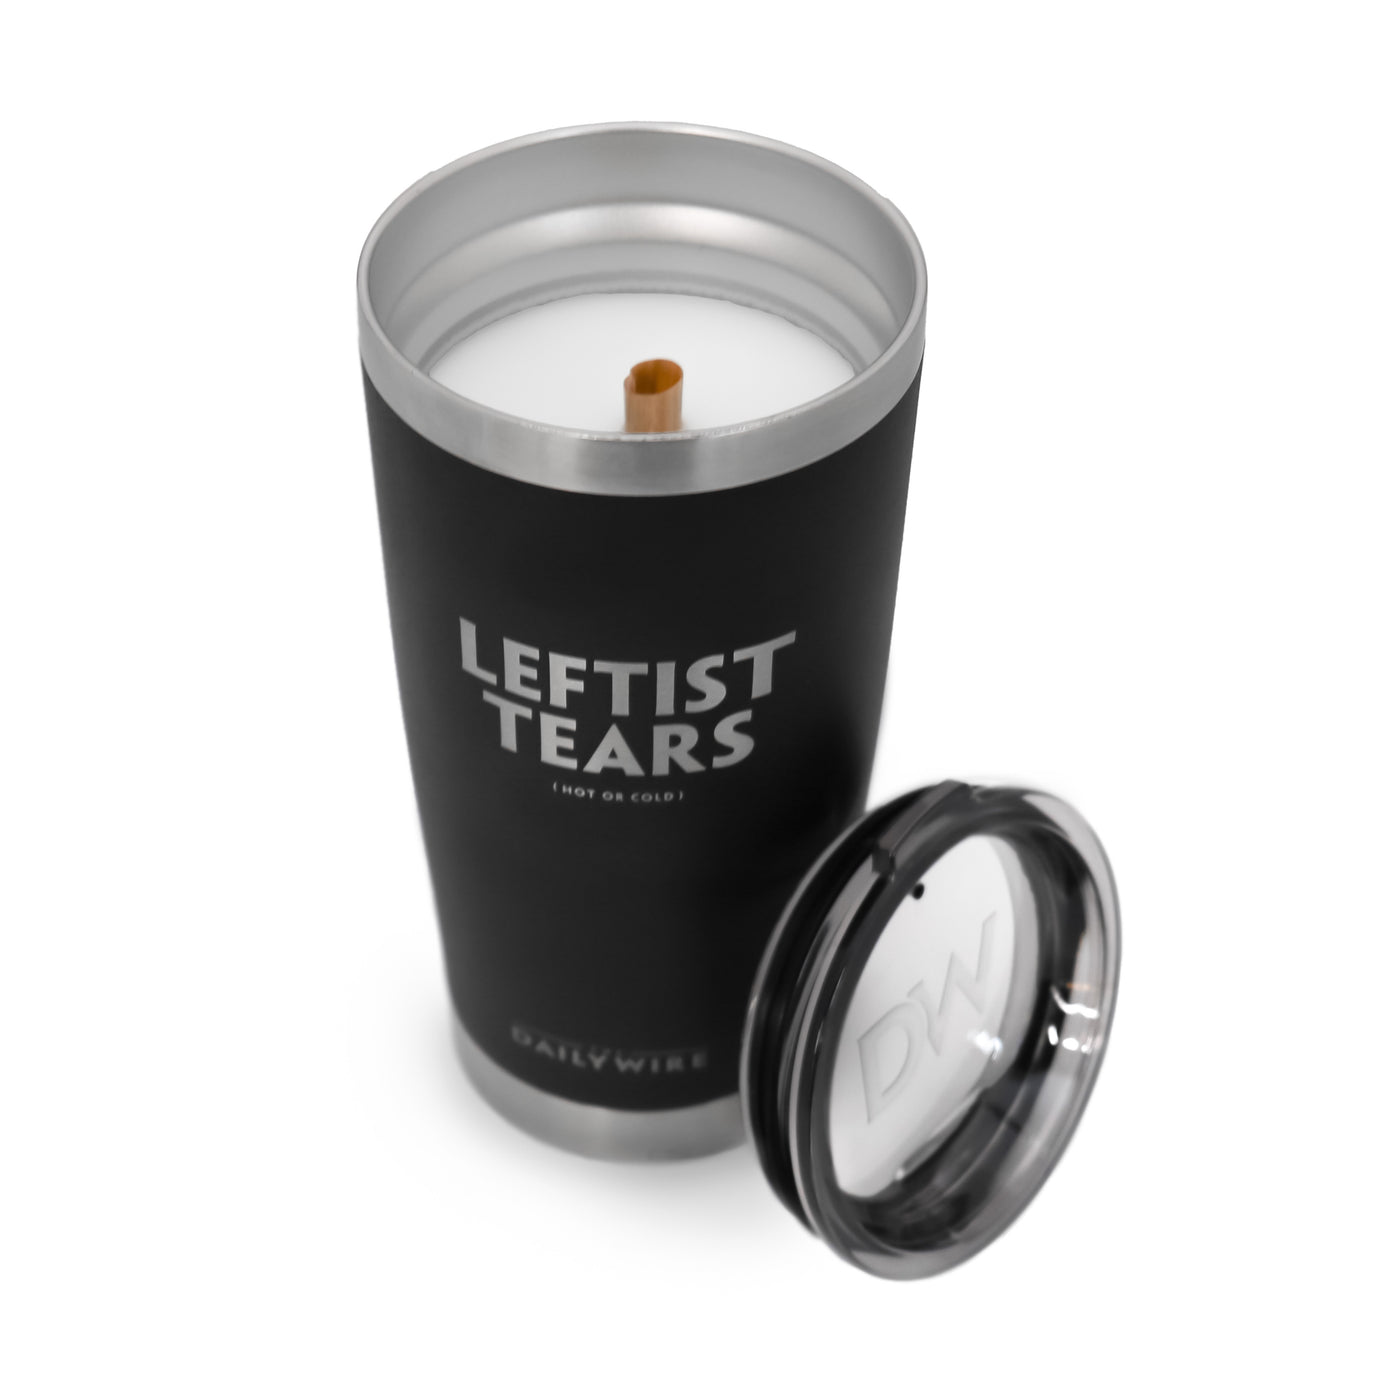 Leftist Tears Tumbler Candle